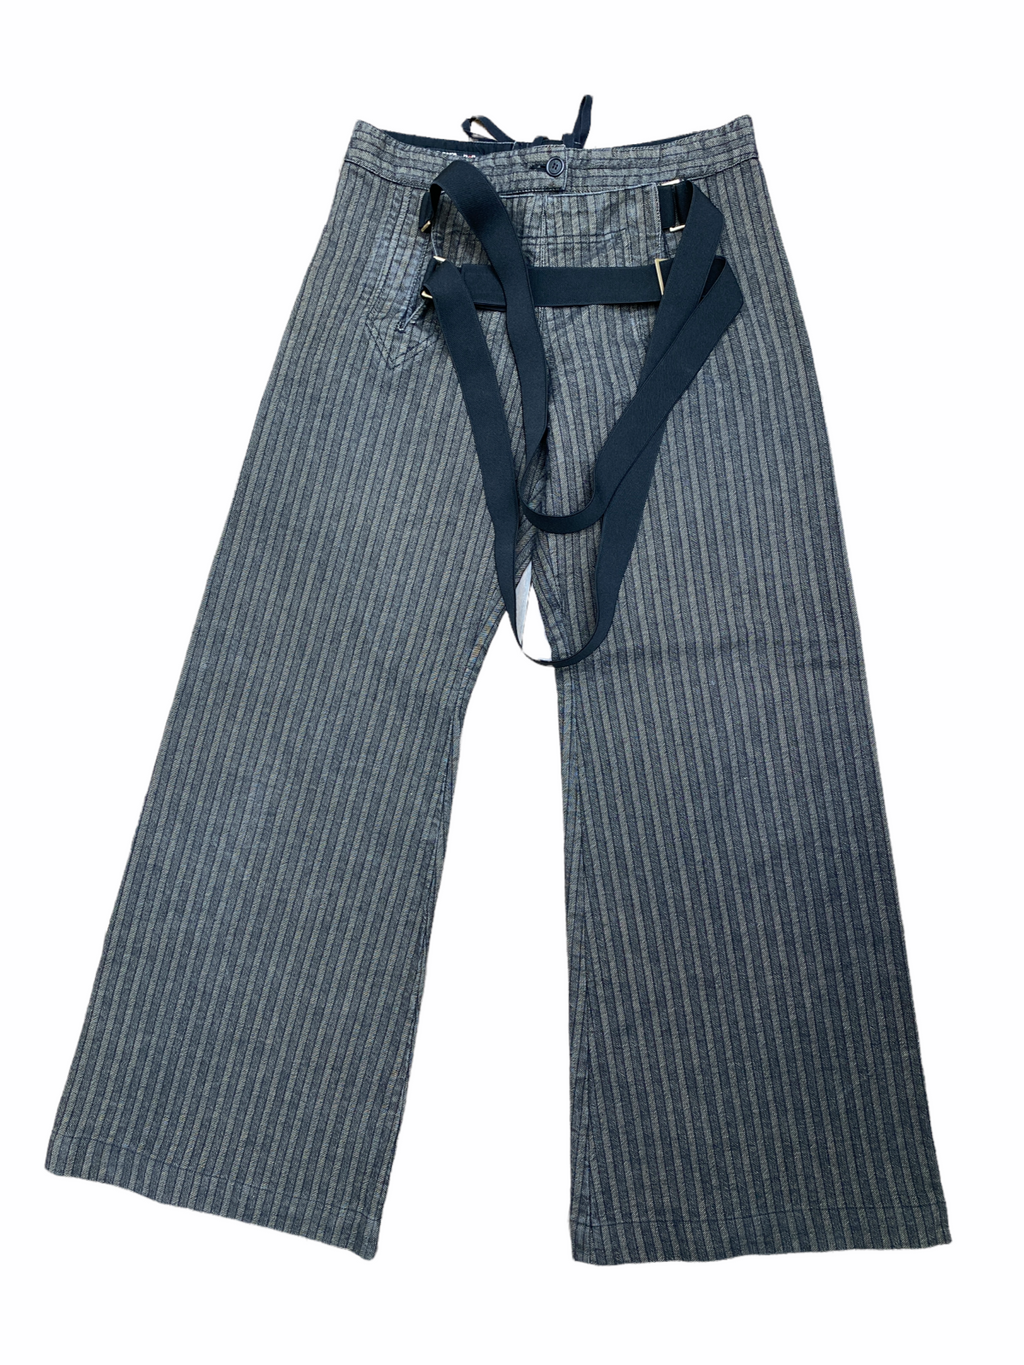 Grey denim Jeans with Suspenders